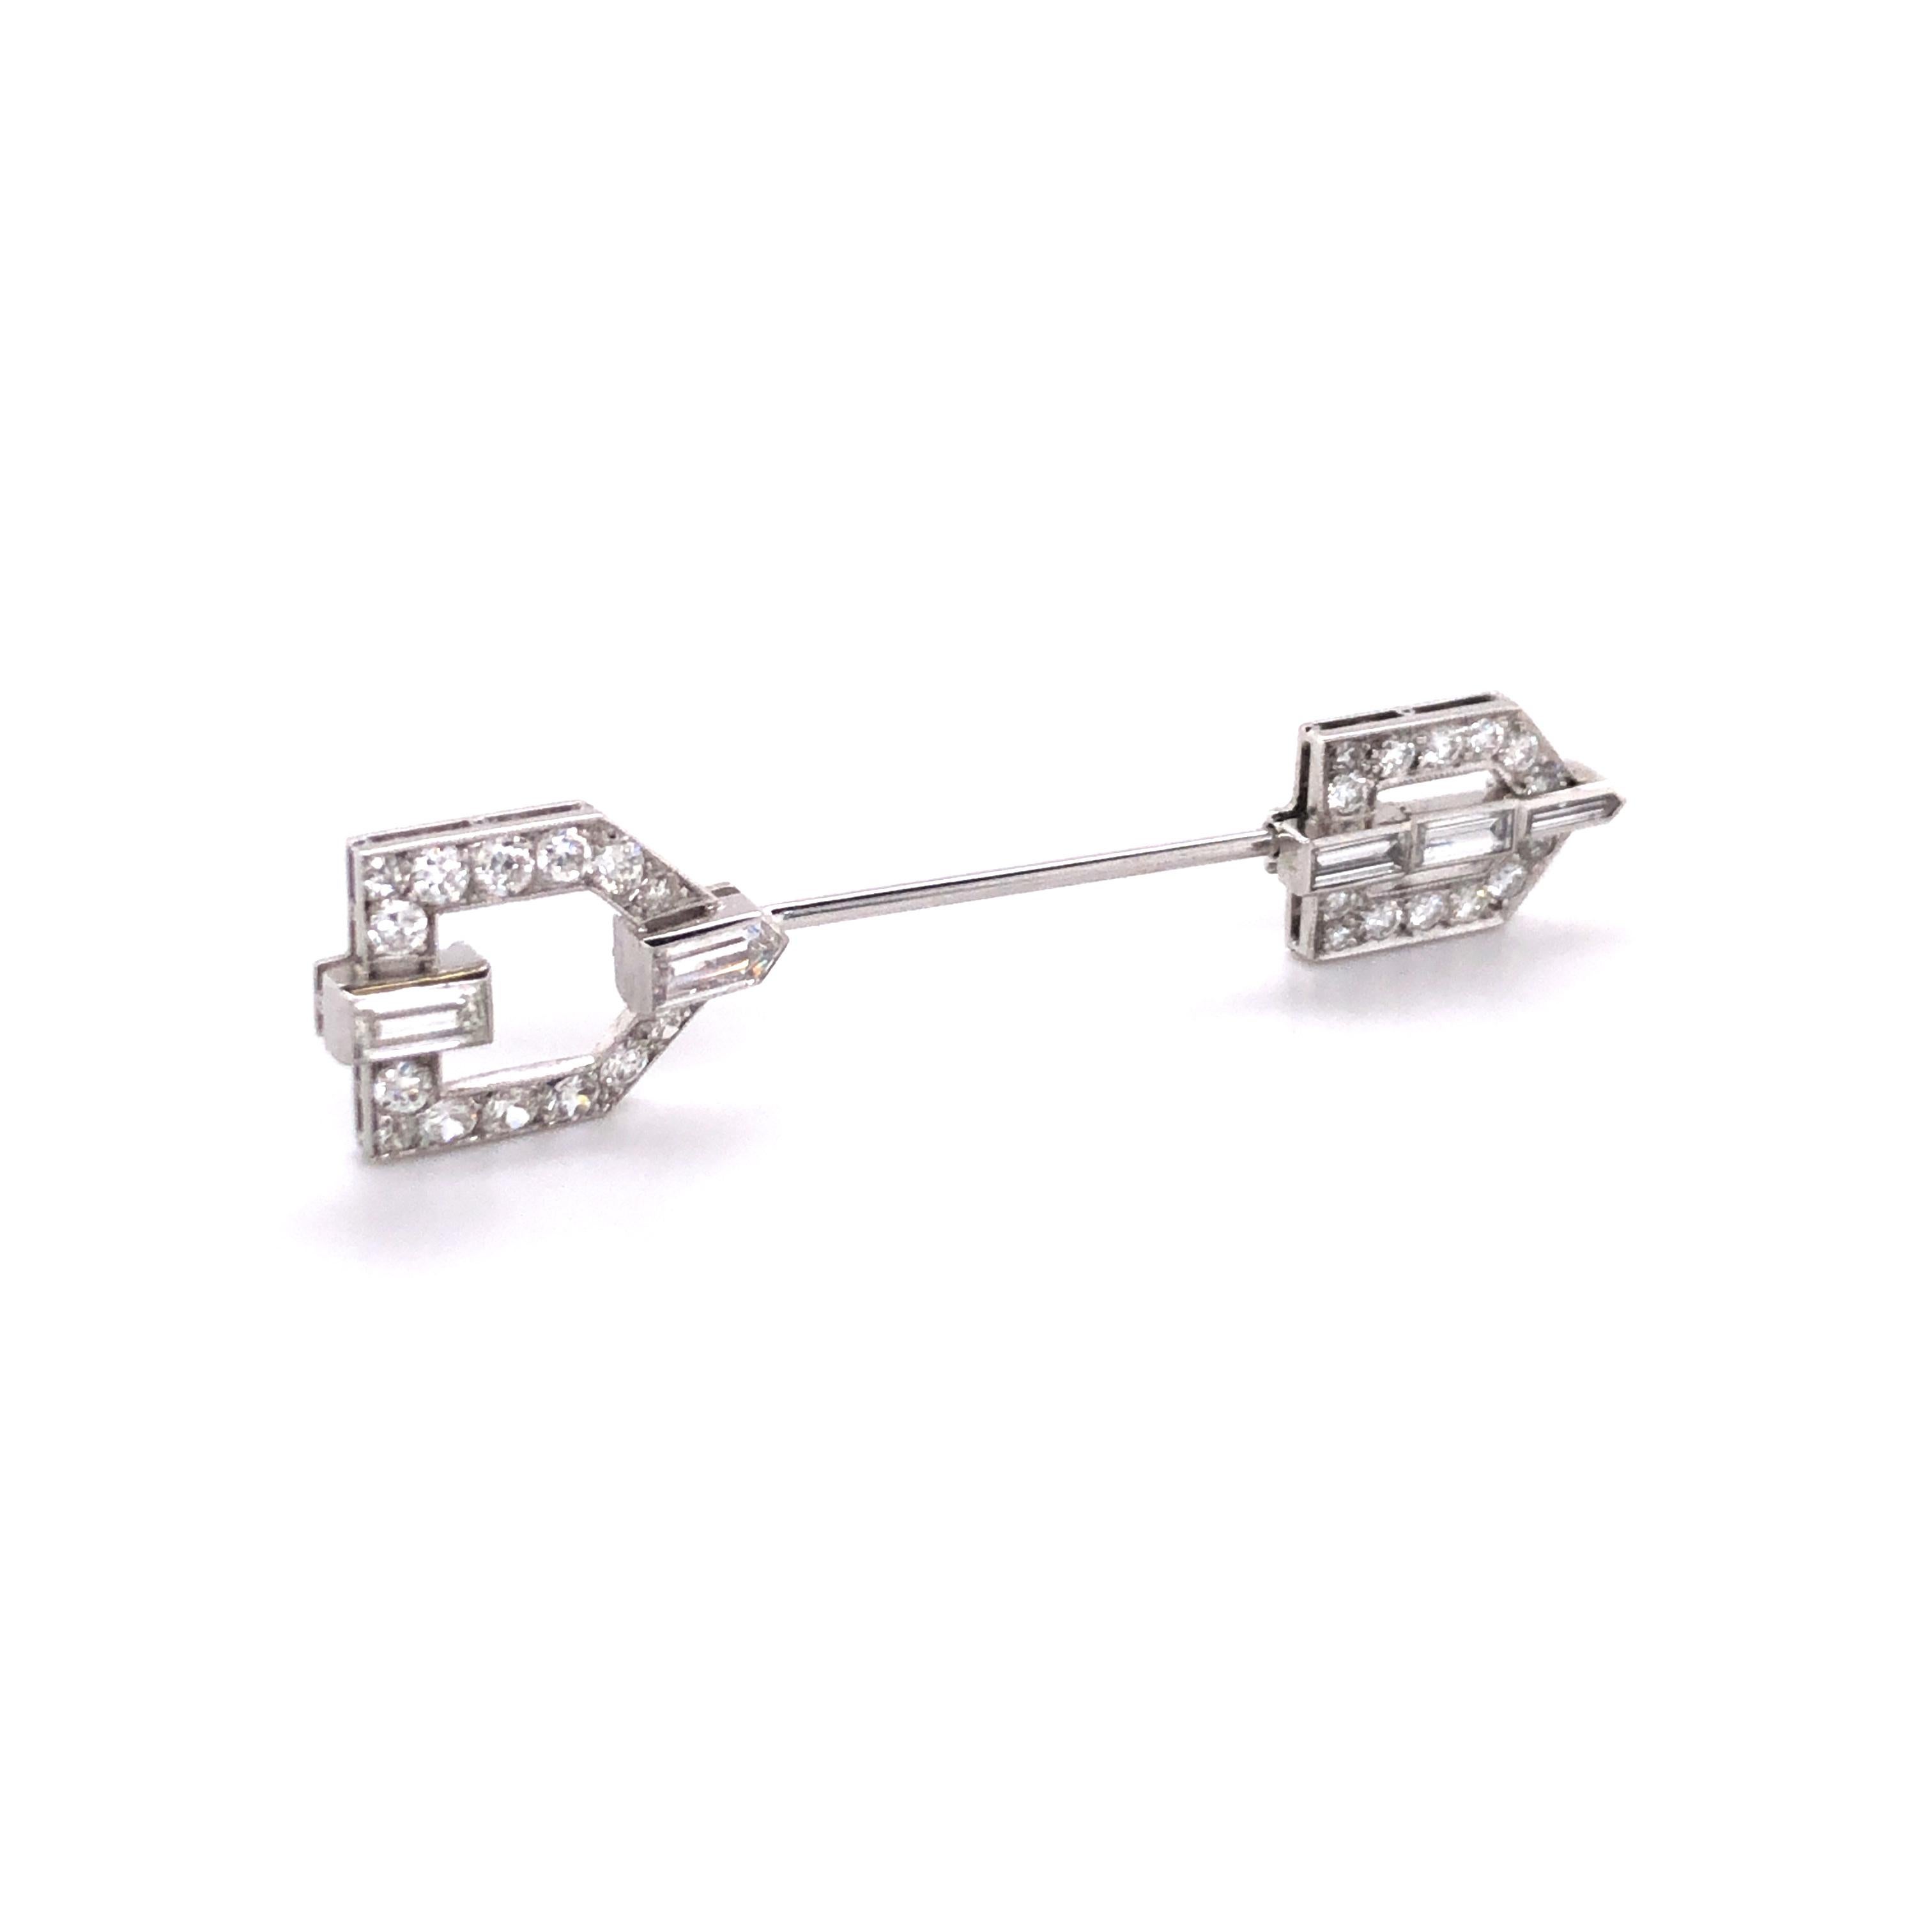 Art Deco Jabot Pin with Diamonds in Platinum and 18 Karat White Gold (Art déco)